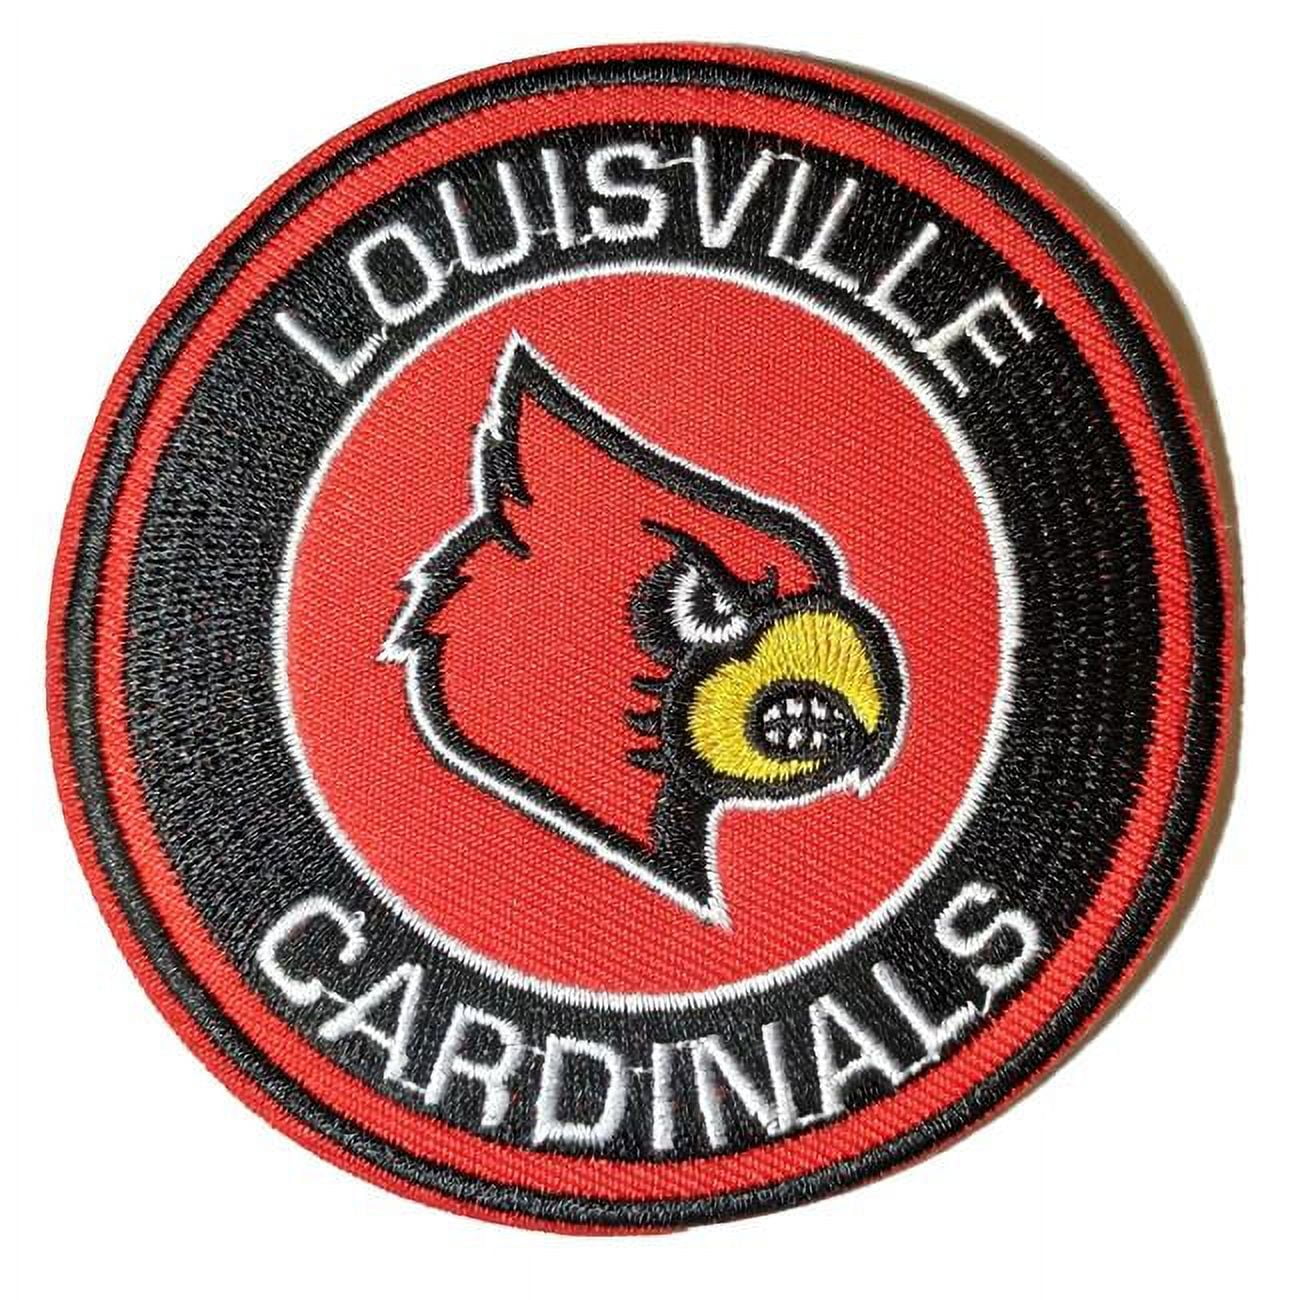 NCAA University of Louisville Cardinals Red & Black College 